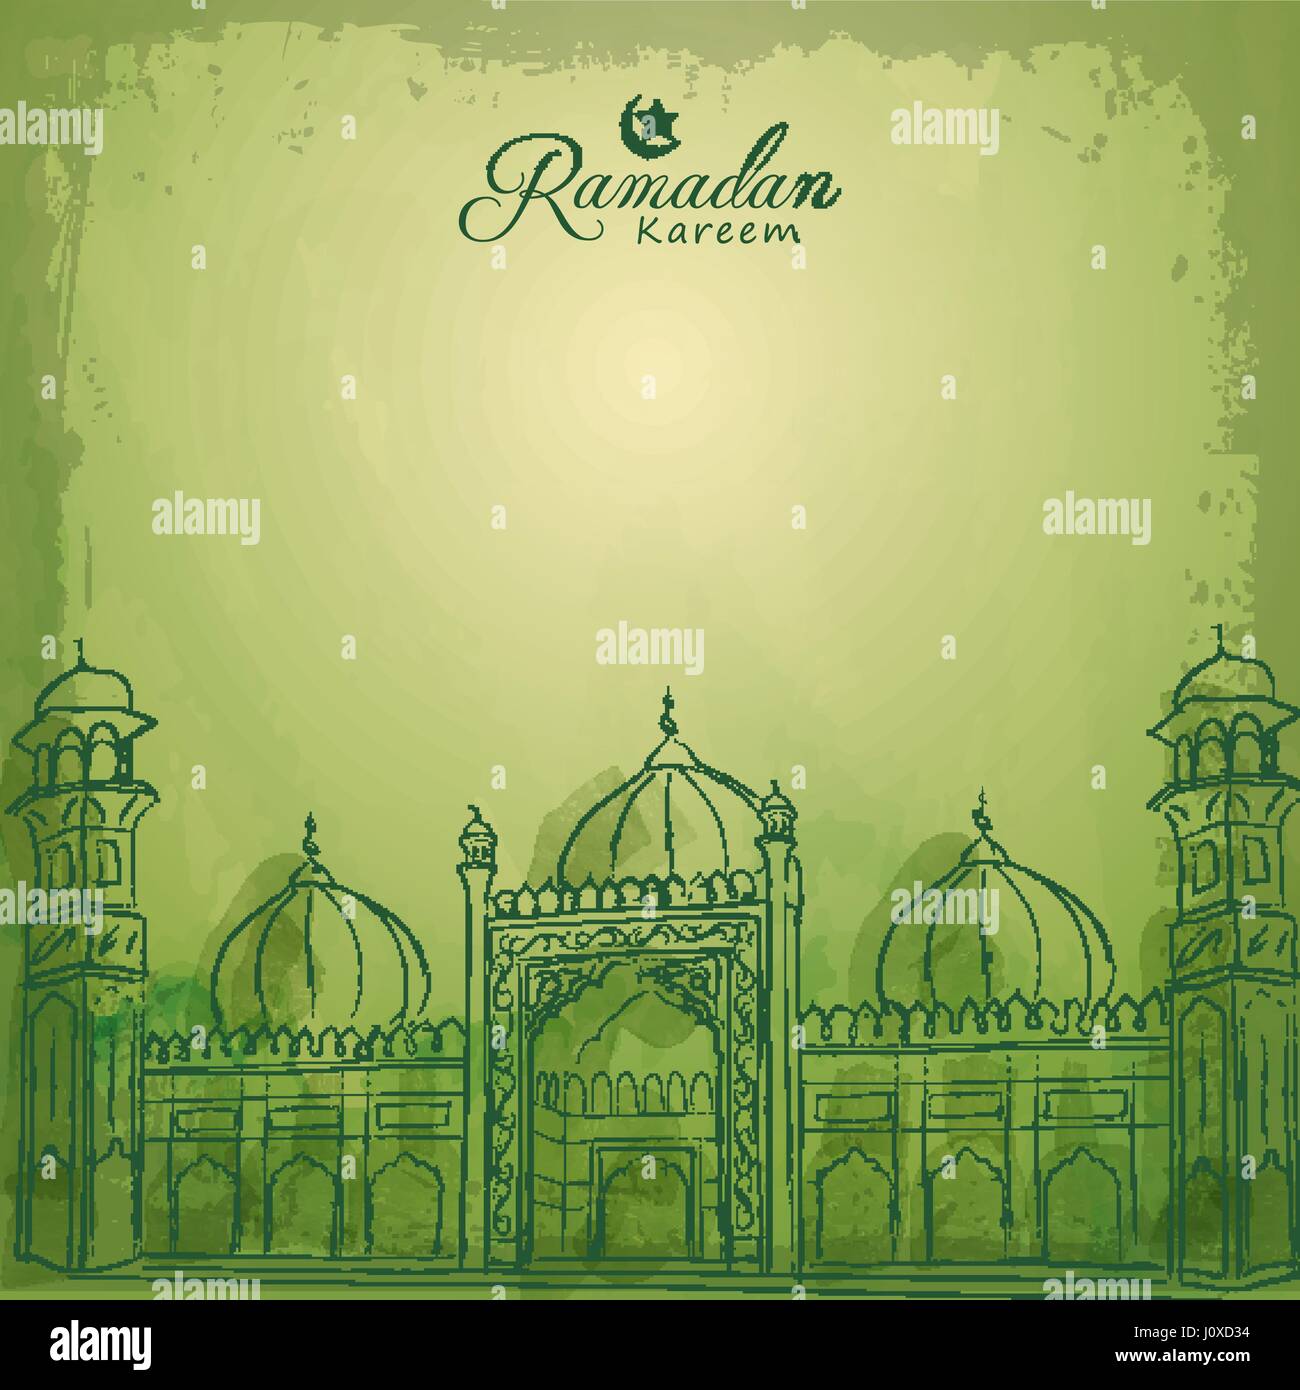 Ramadan Kareem Islamic Greeting Banner Background Stock Vector Image Art Alamy